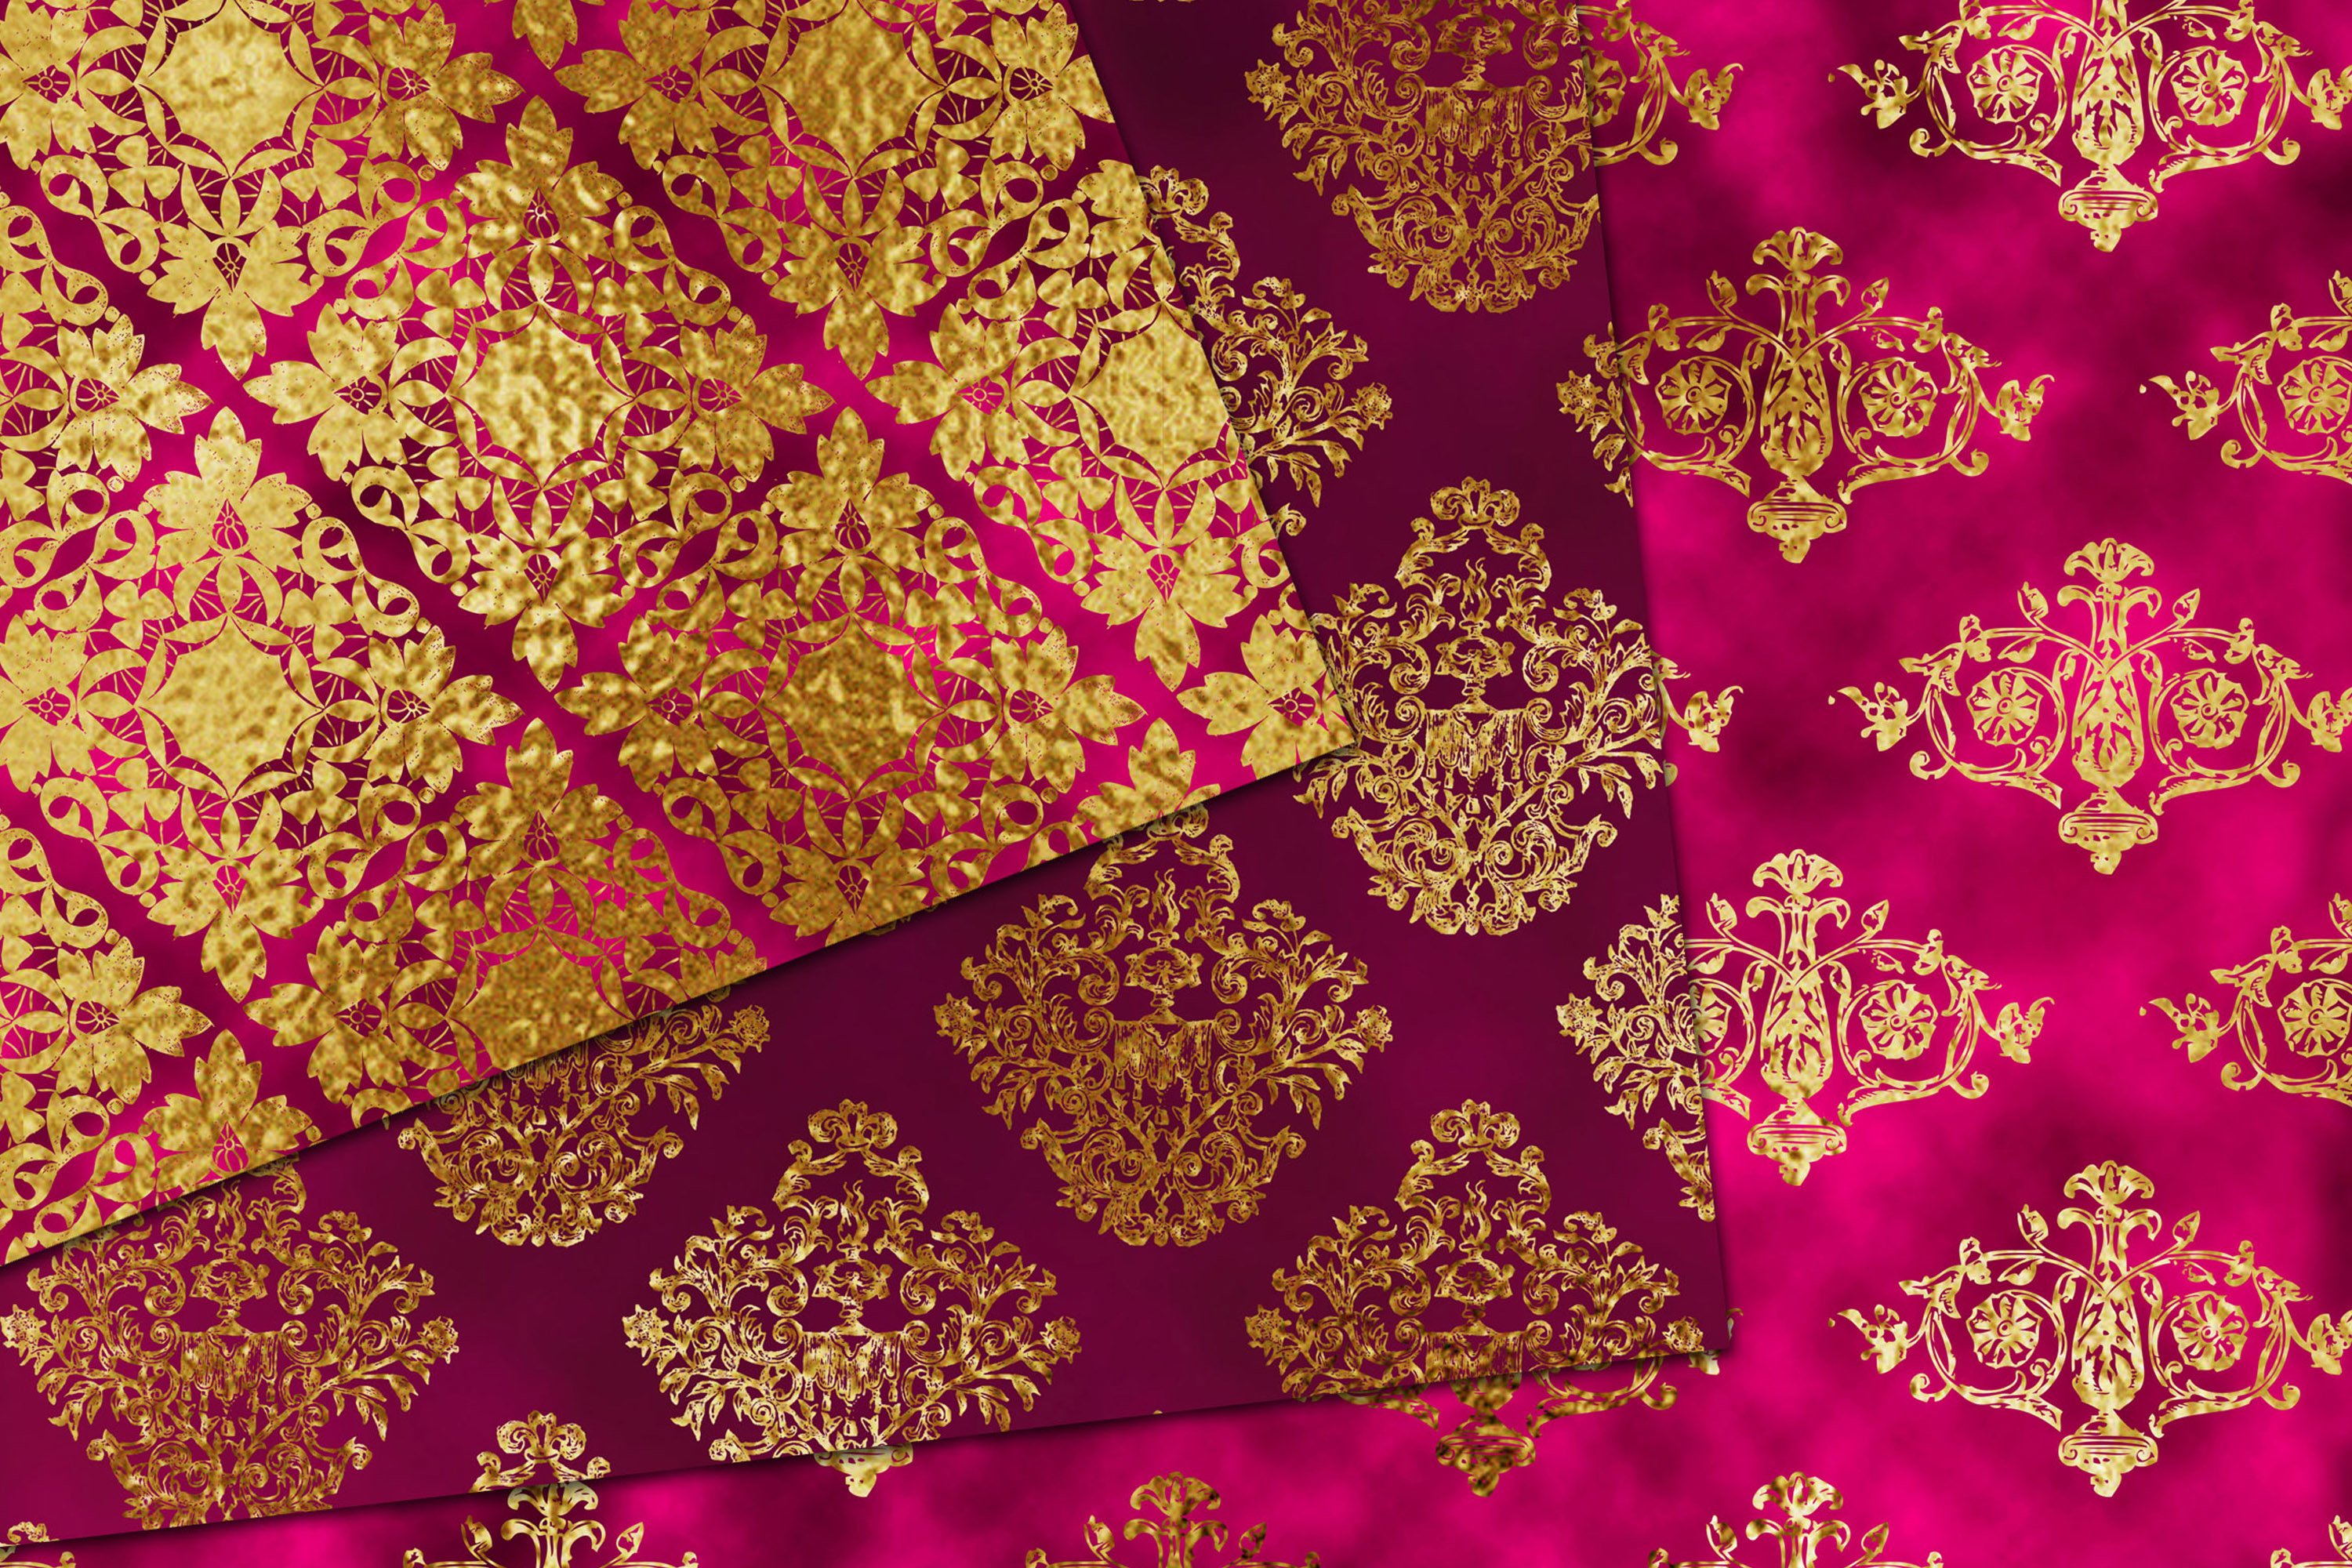 3 Gold & Pink Decorative Seamless Patterns.